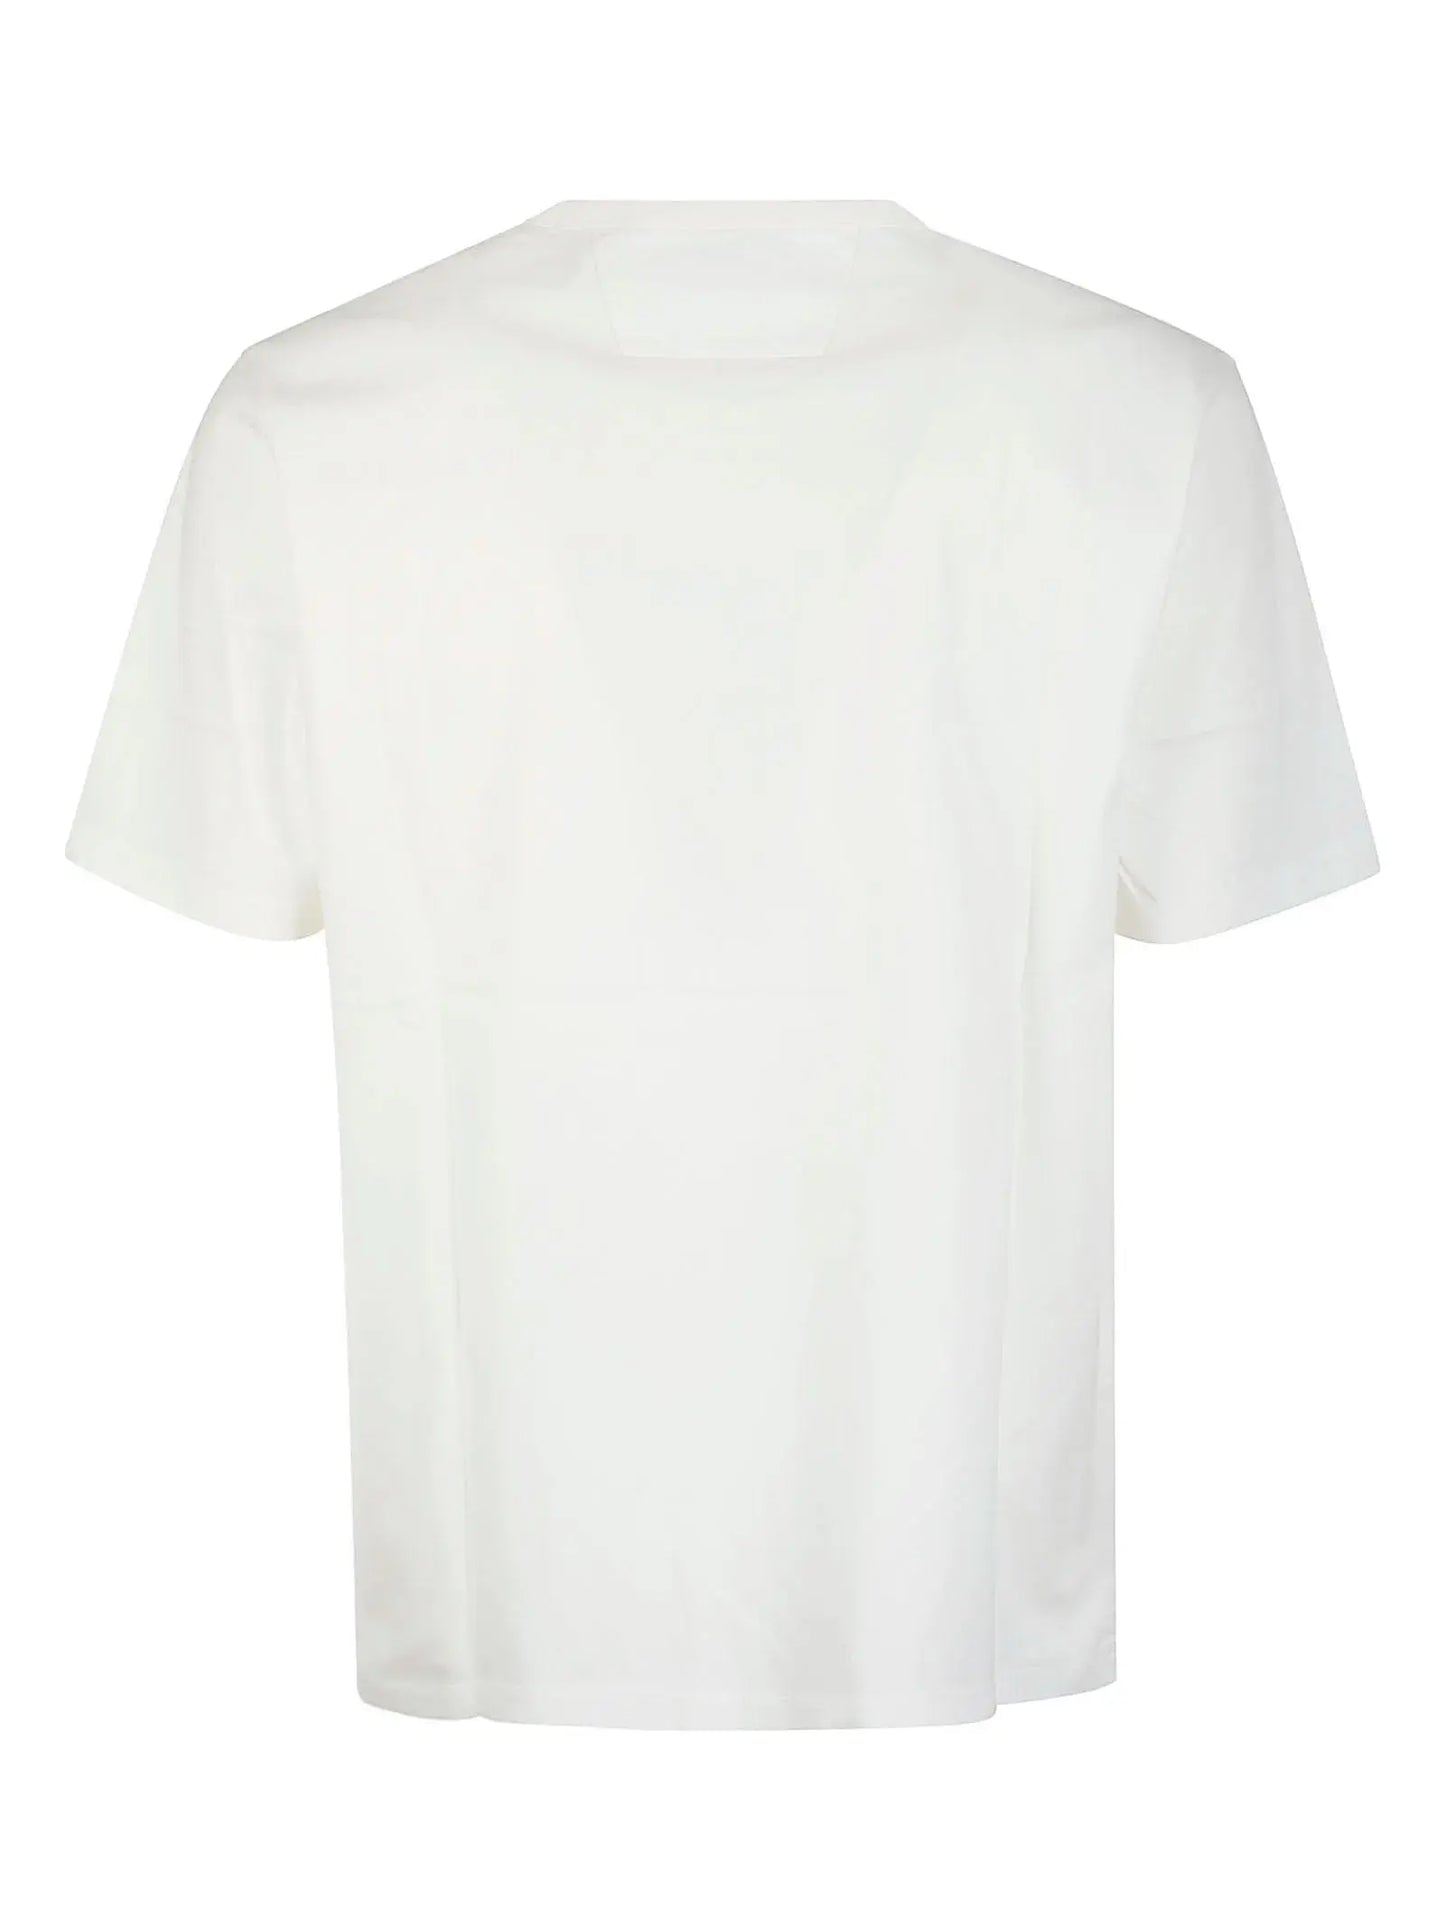 C.P Company Metropolis Centre Logo White T-Shirt - flizzone